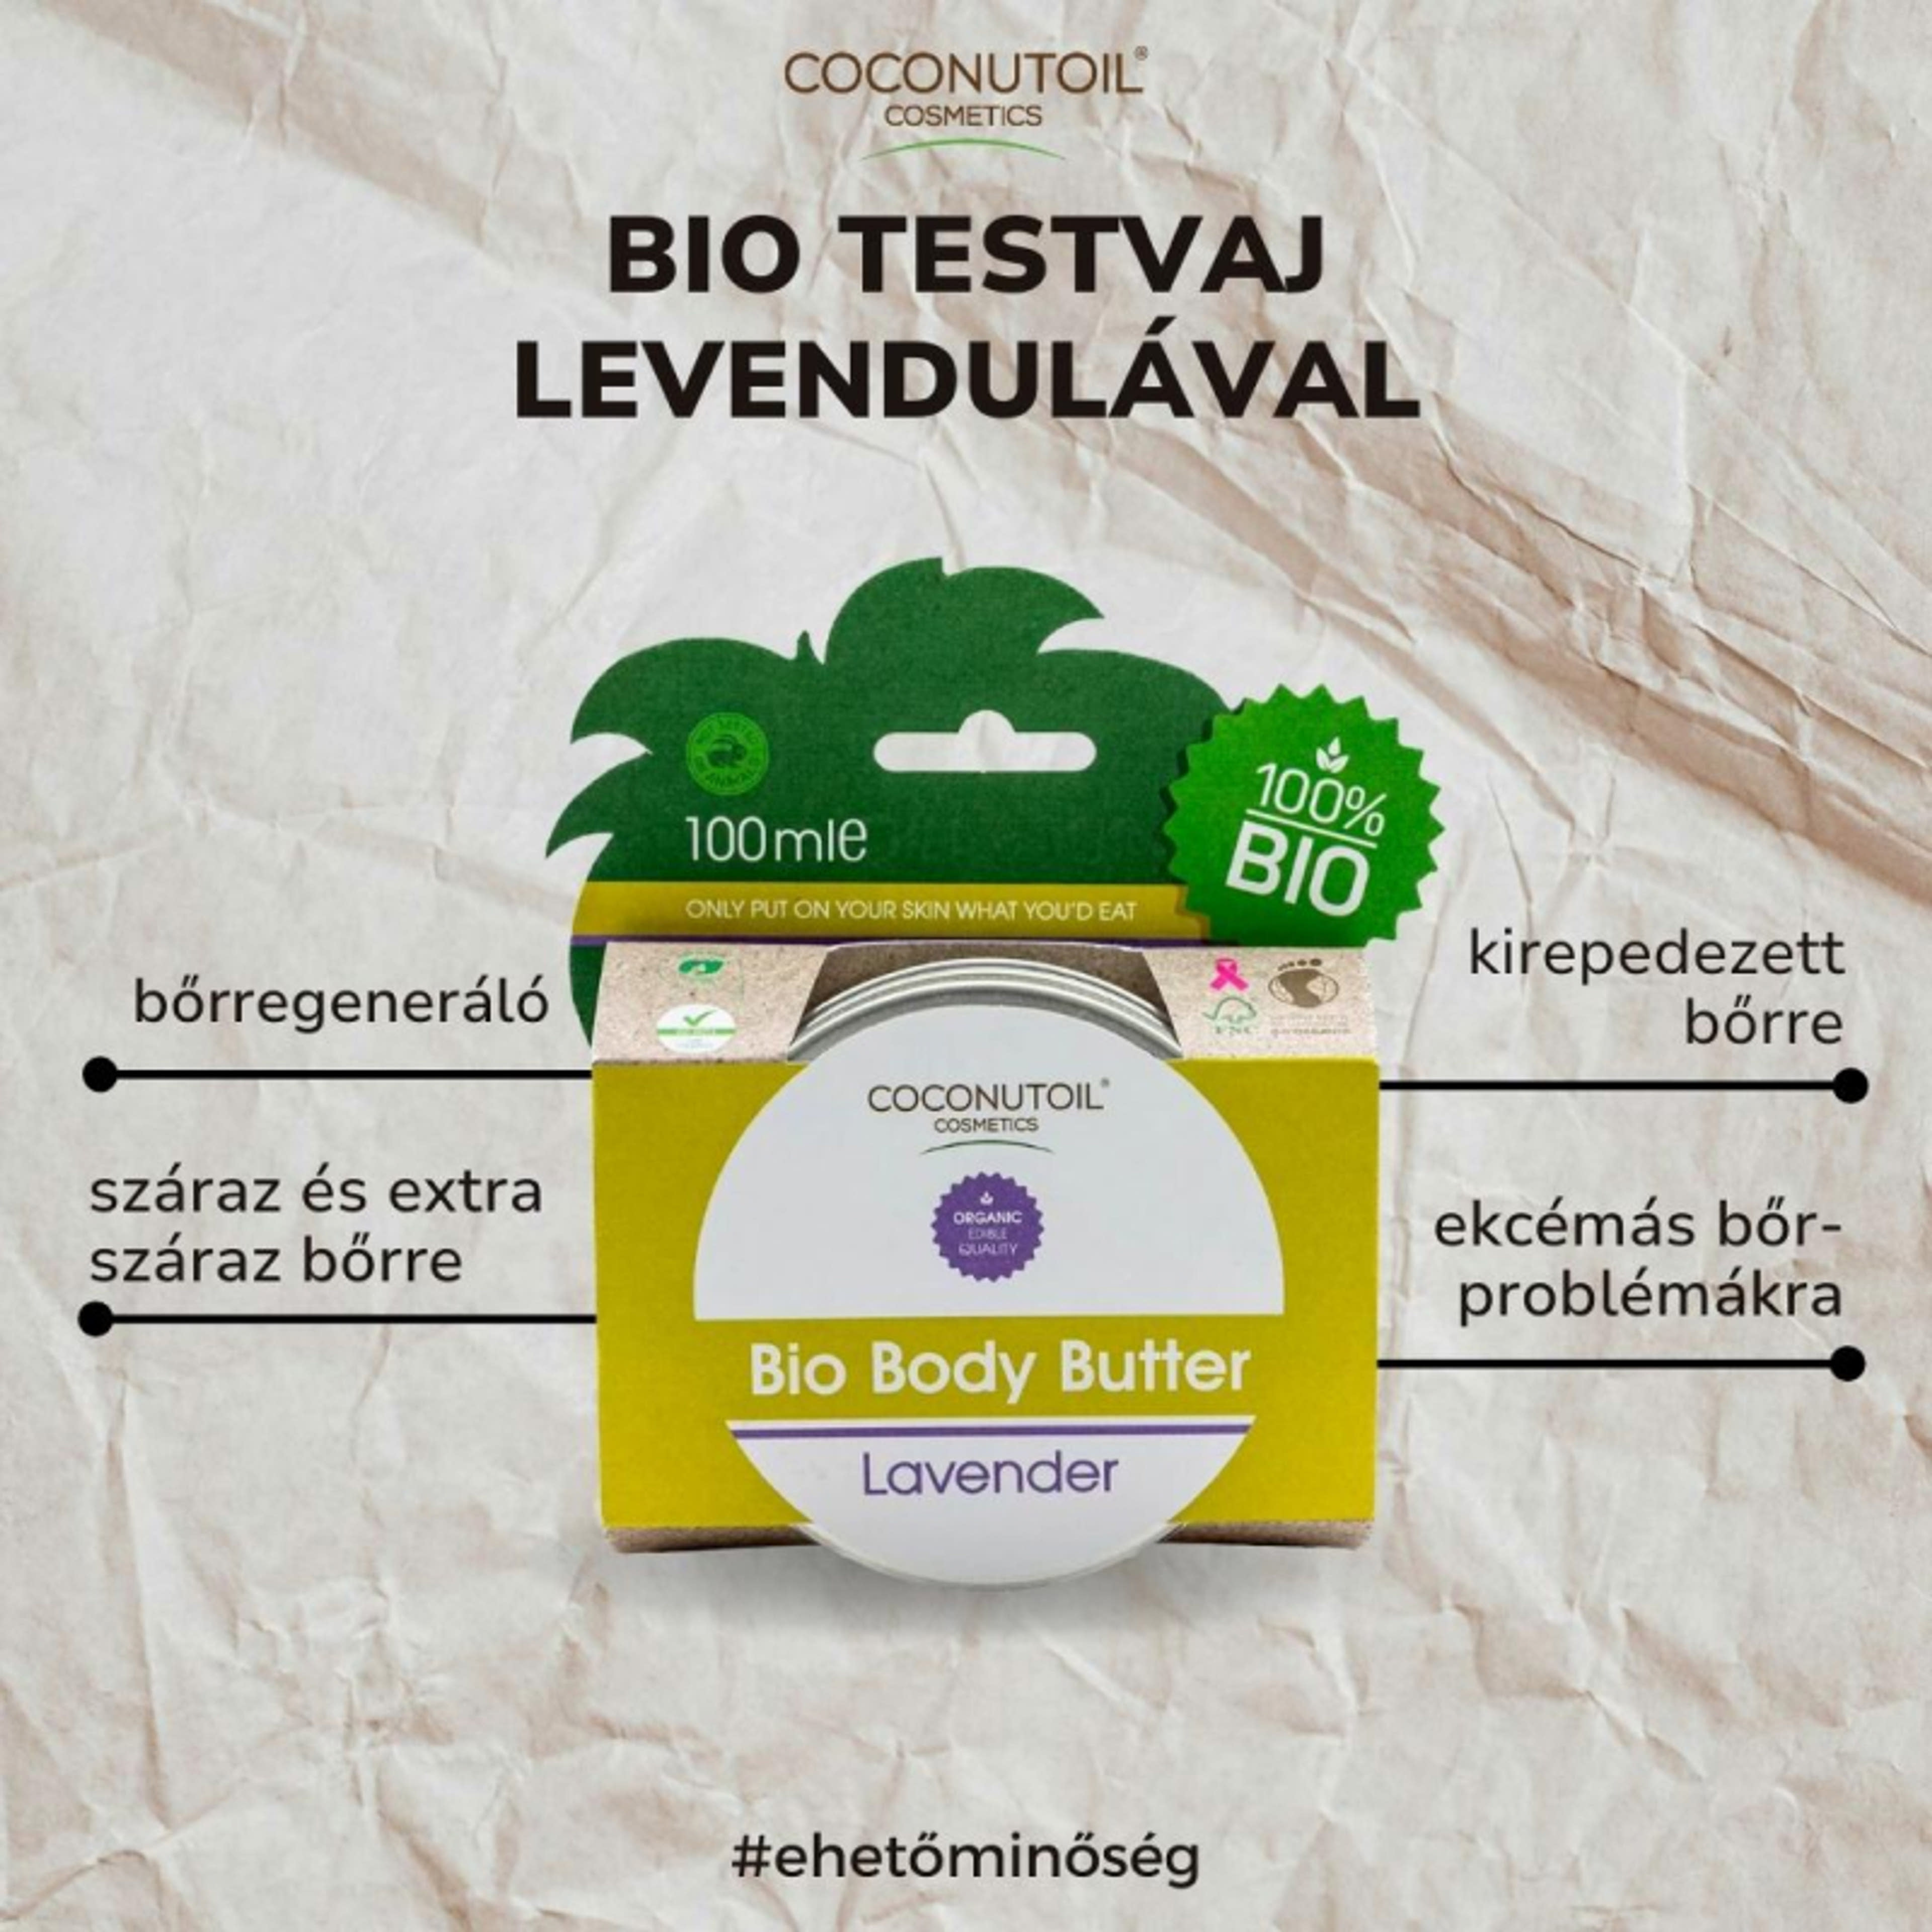 Coconutoil Cosmetics Bio levendula testvaj - 100 ml-3